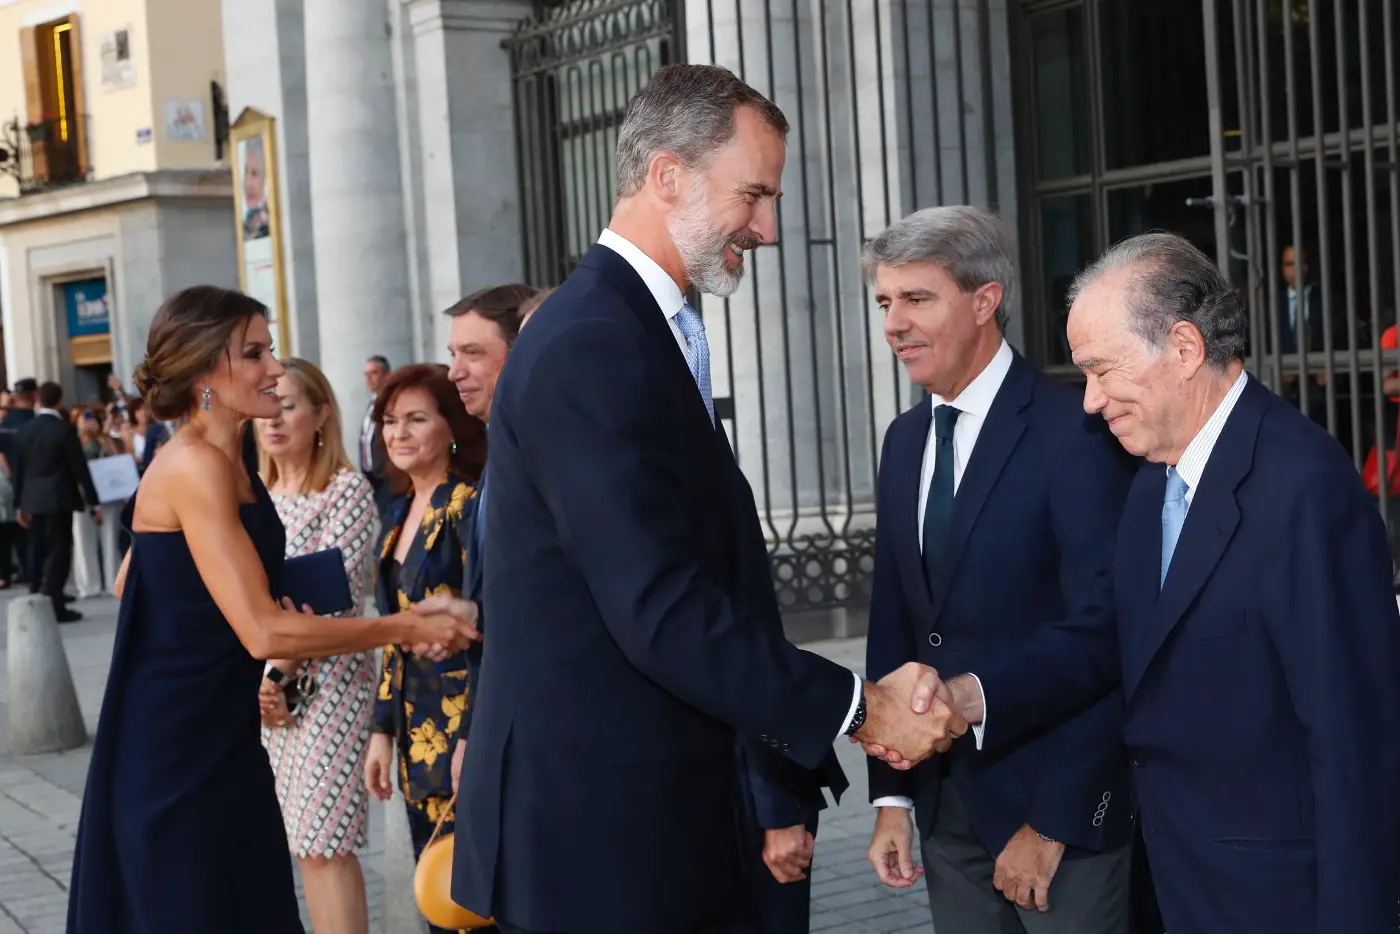 King Felipe and Queen Letizia opened the 2018-2019 season of Teatro Theatr